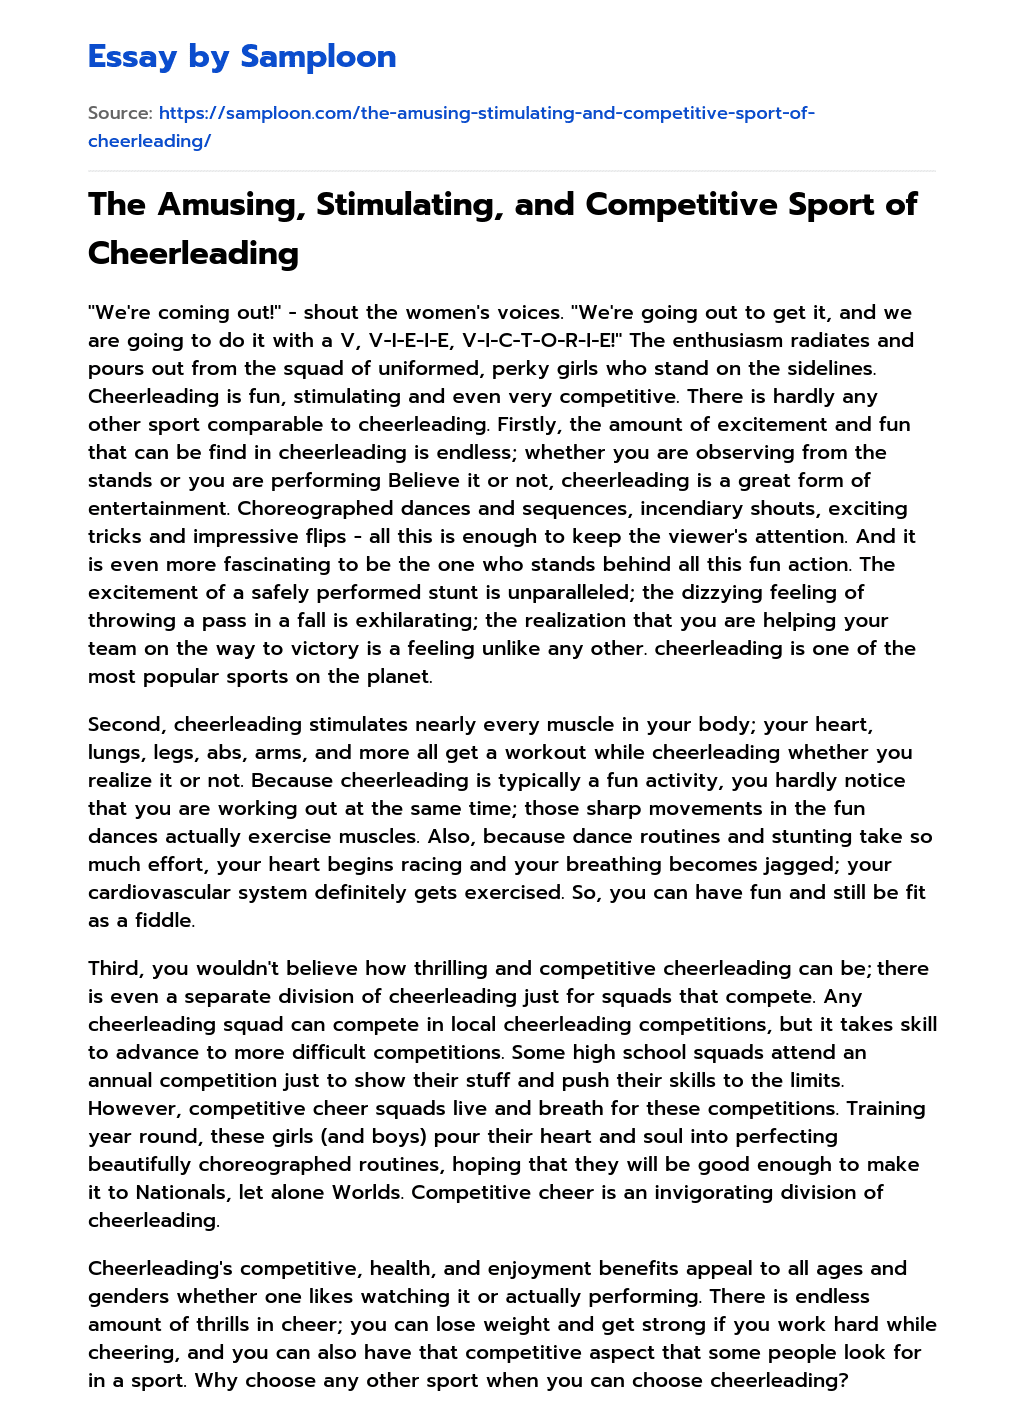 competitive cheerleading essay